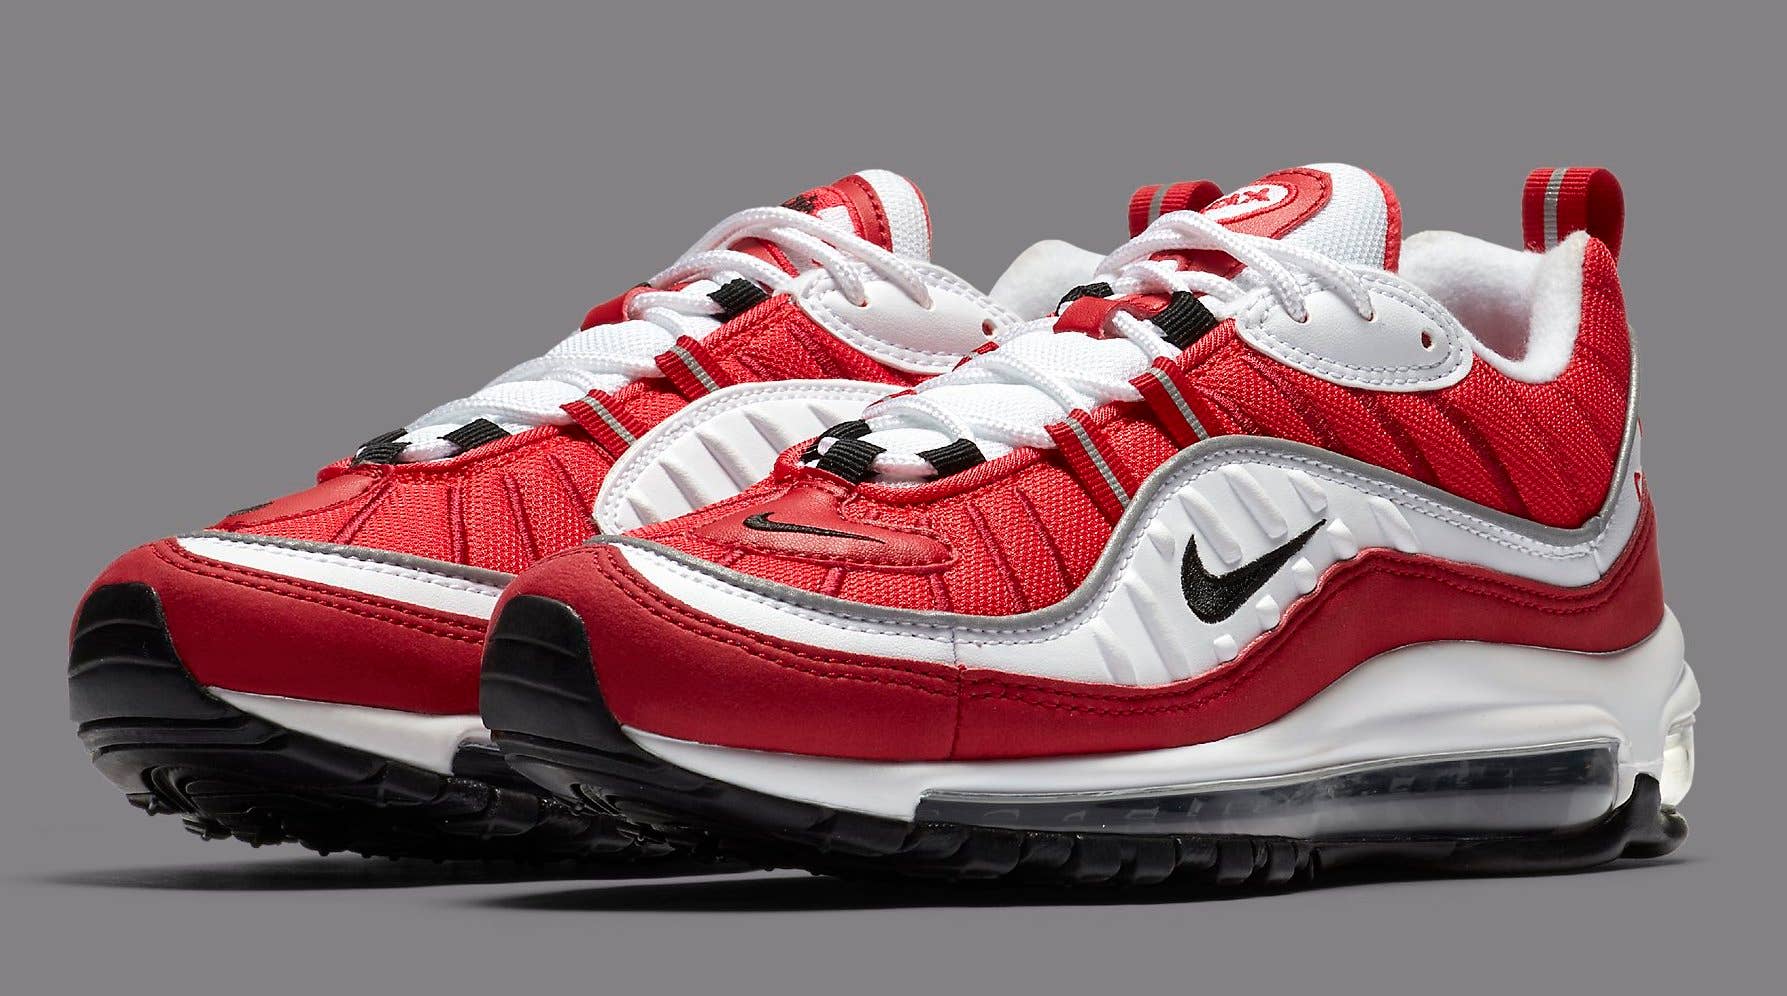 Nike Air Max 97 Gym Red On Feet